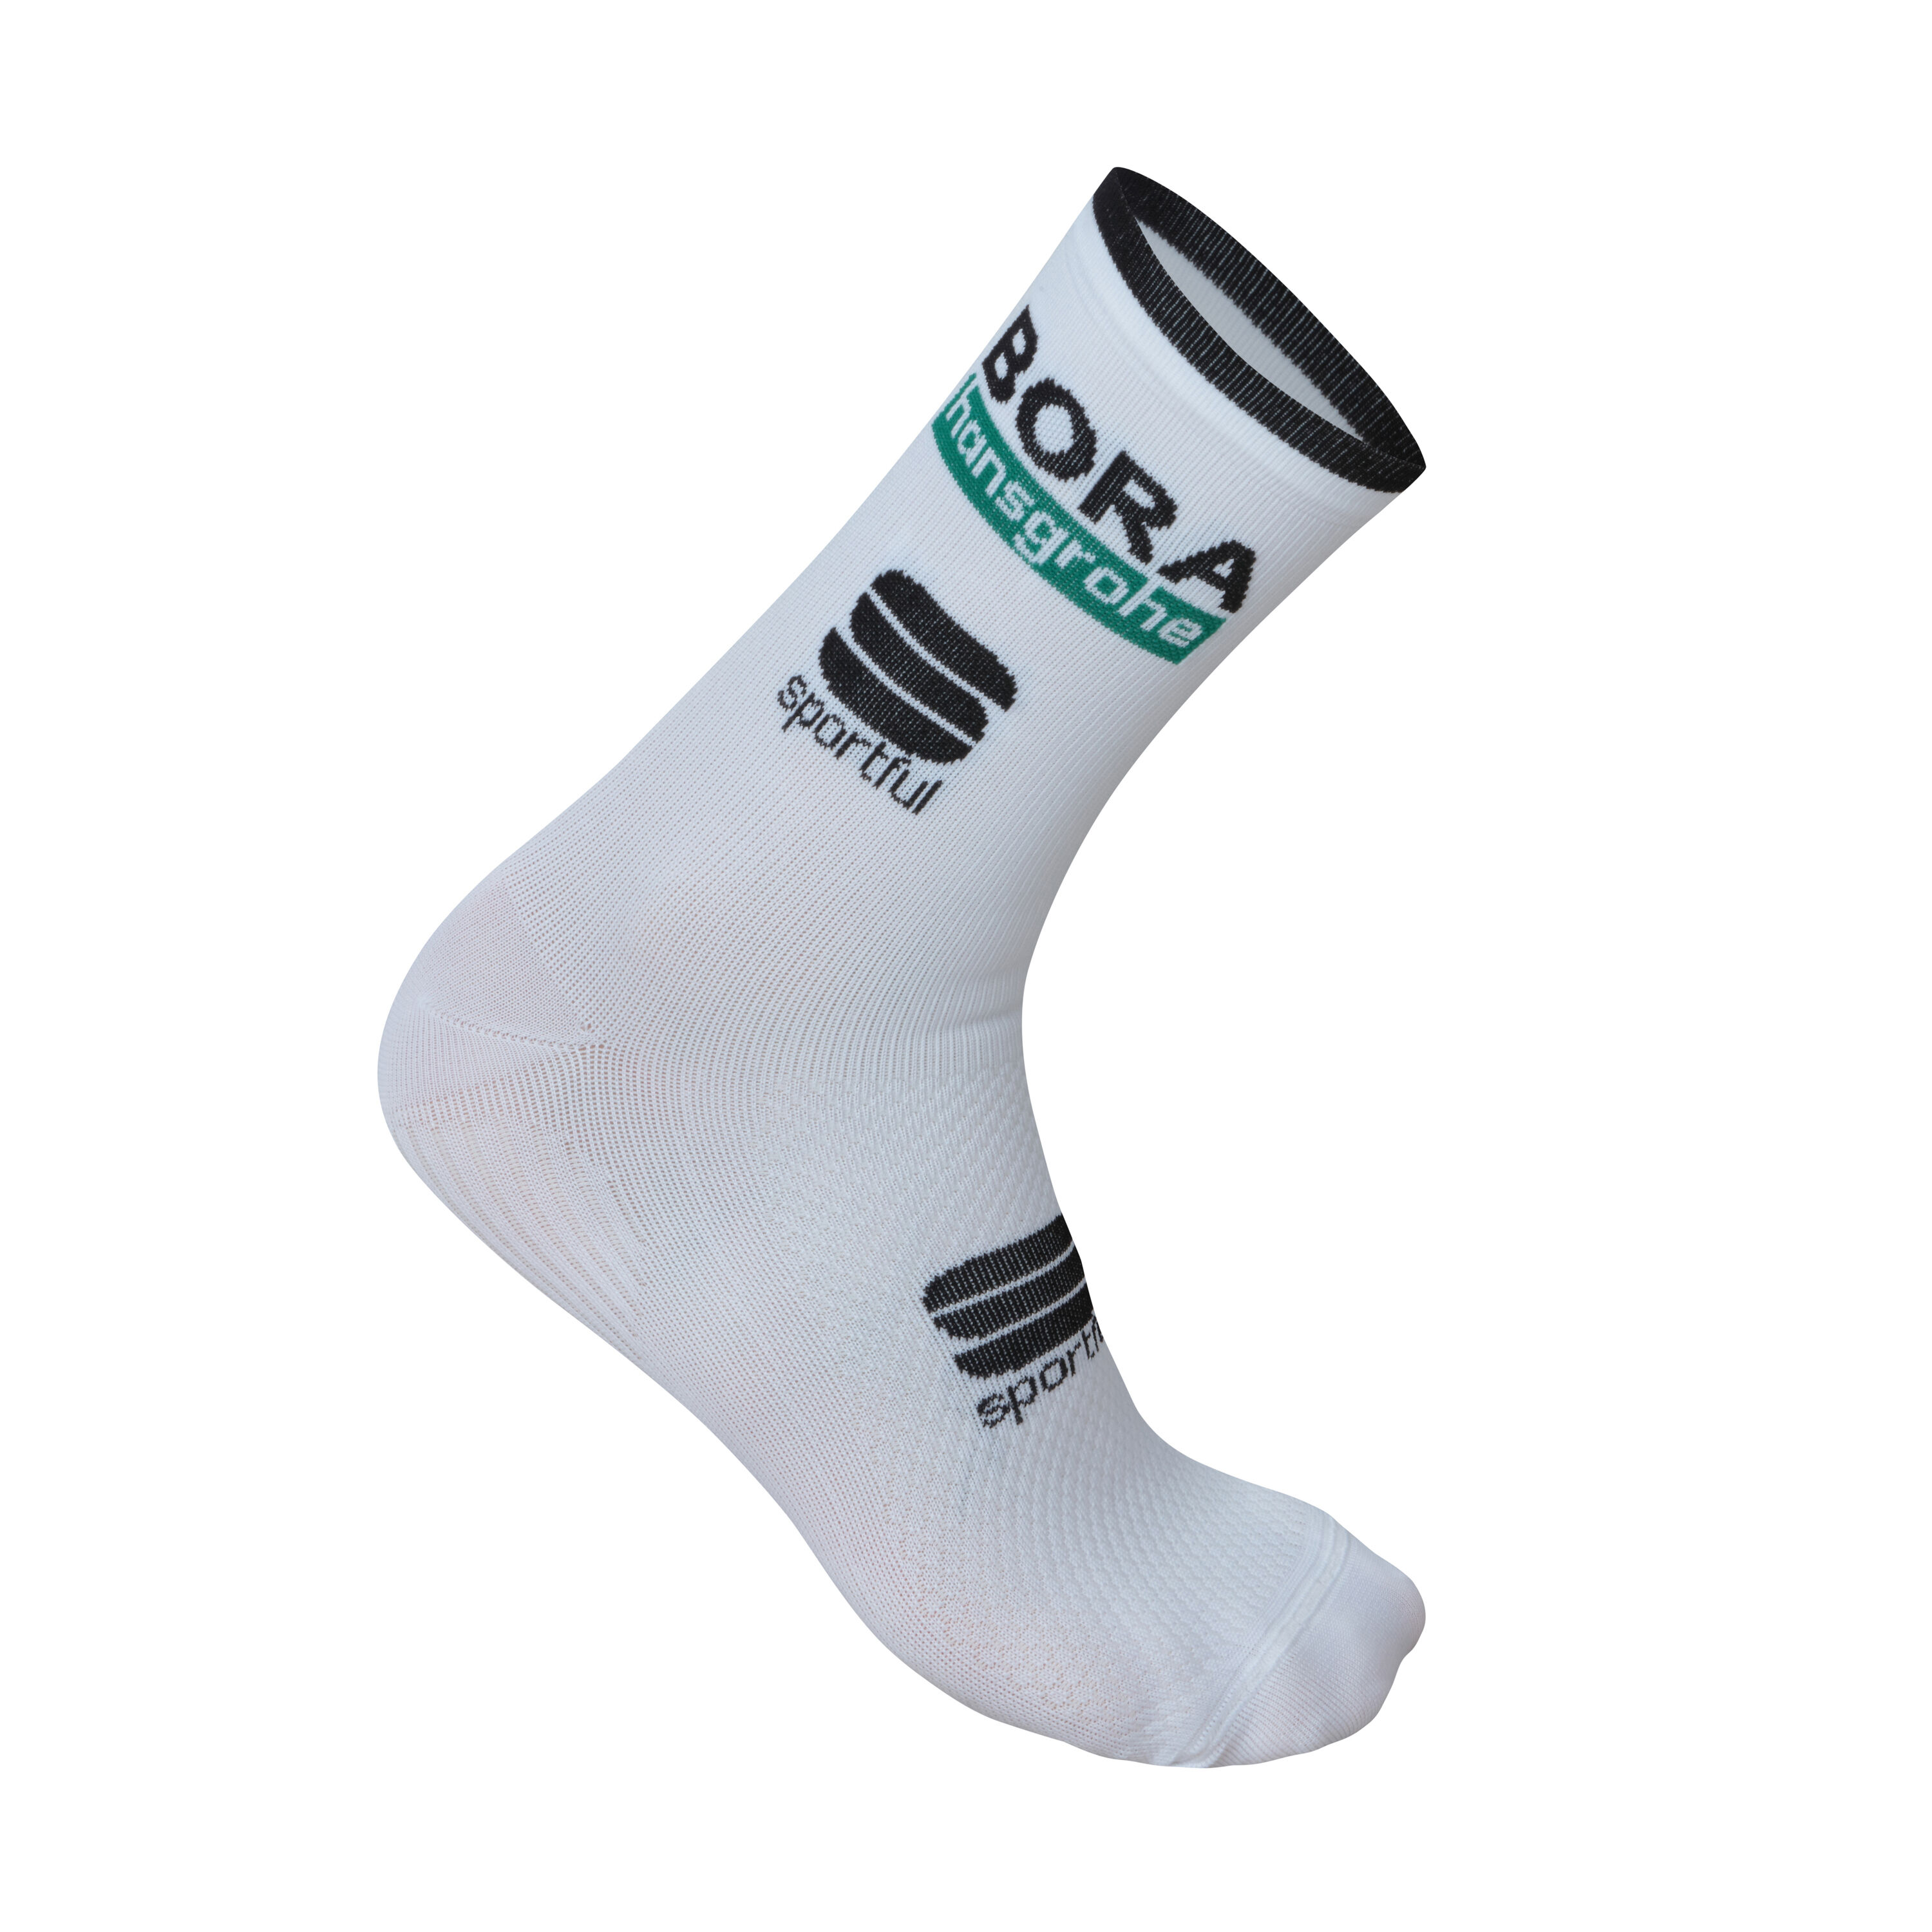 Sportful Bora Hansgrohe Team Race Socks - Cycling socks